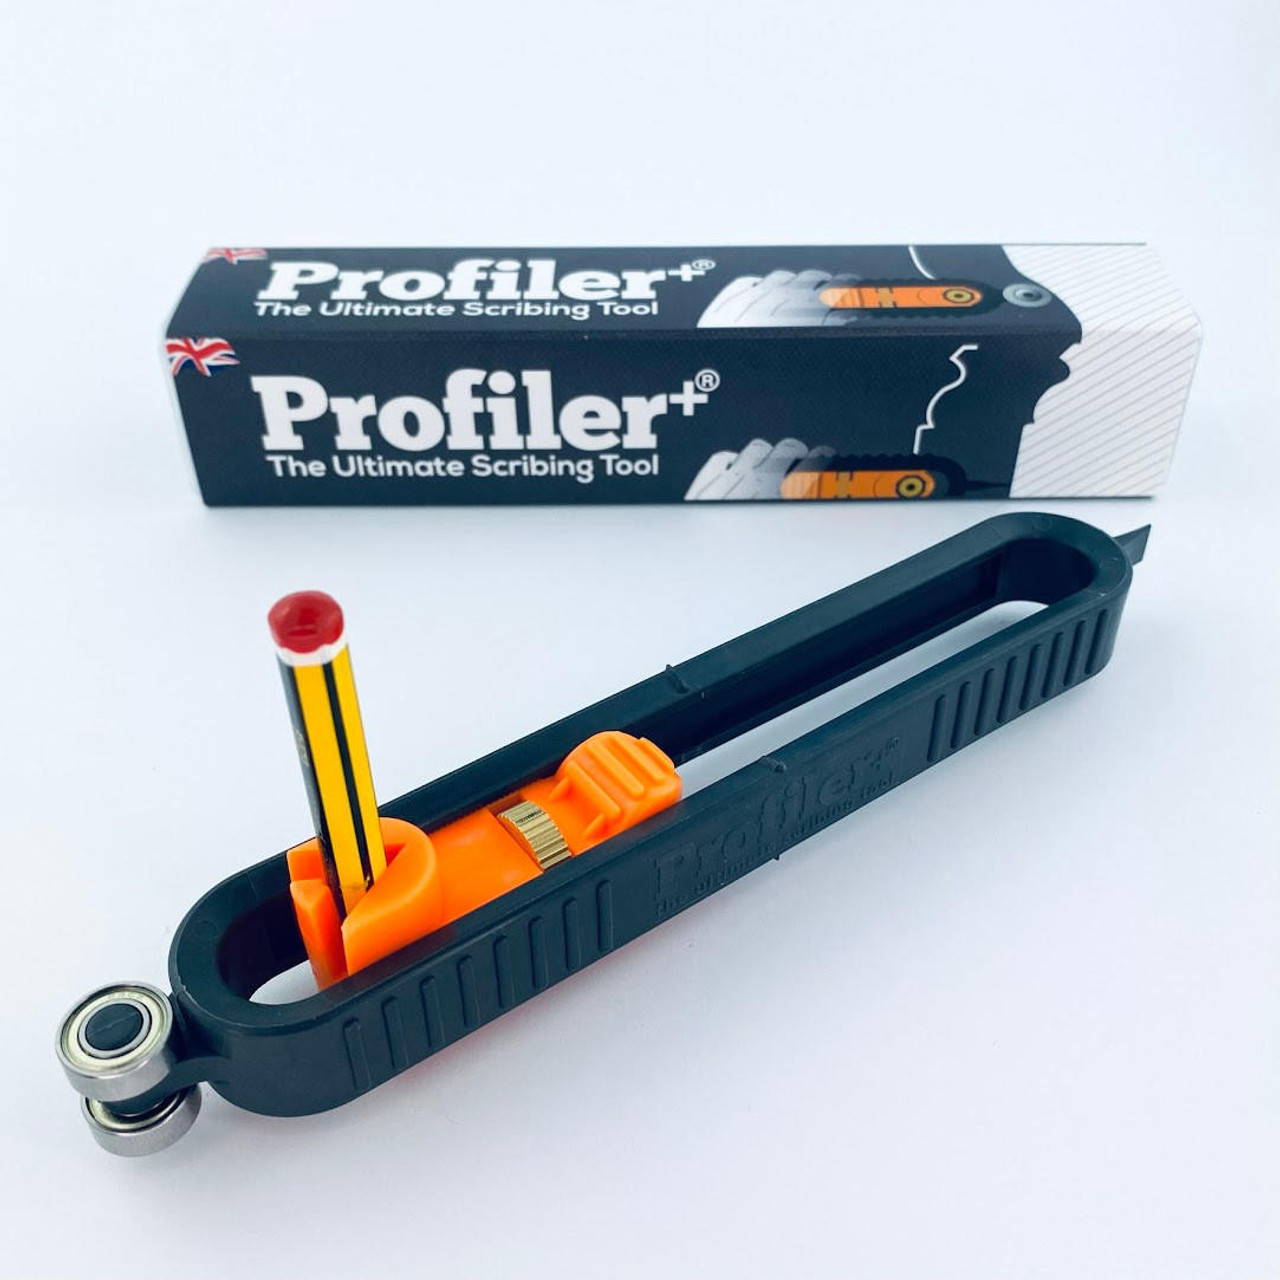 Profiler+ The Ultimate Scribing Tool